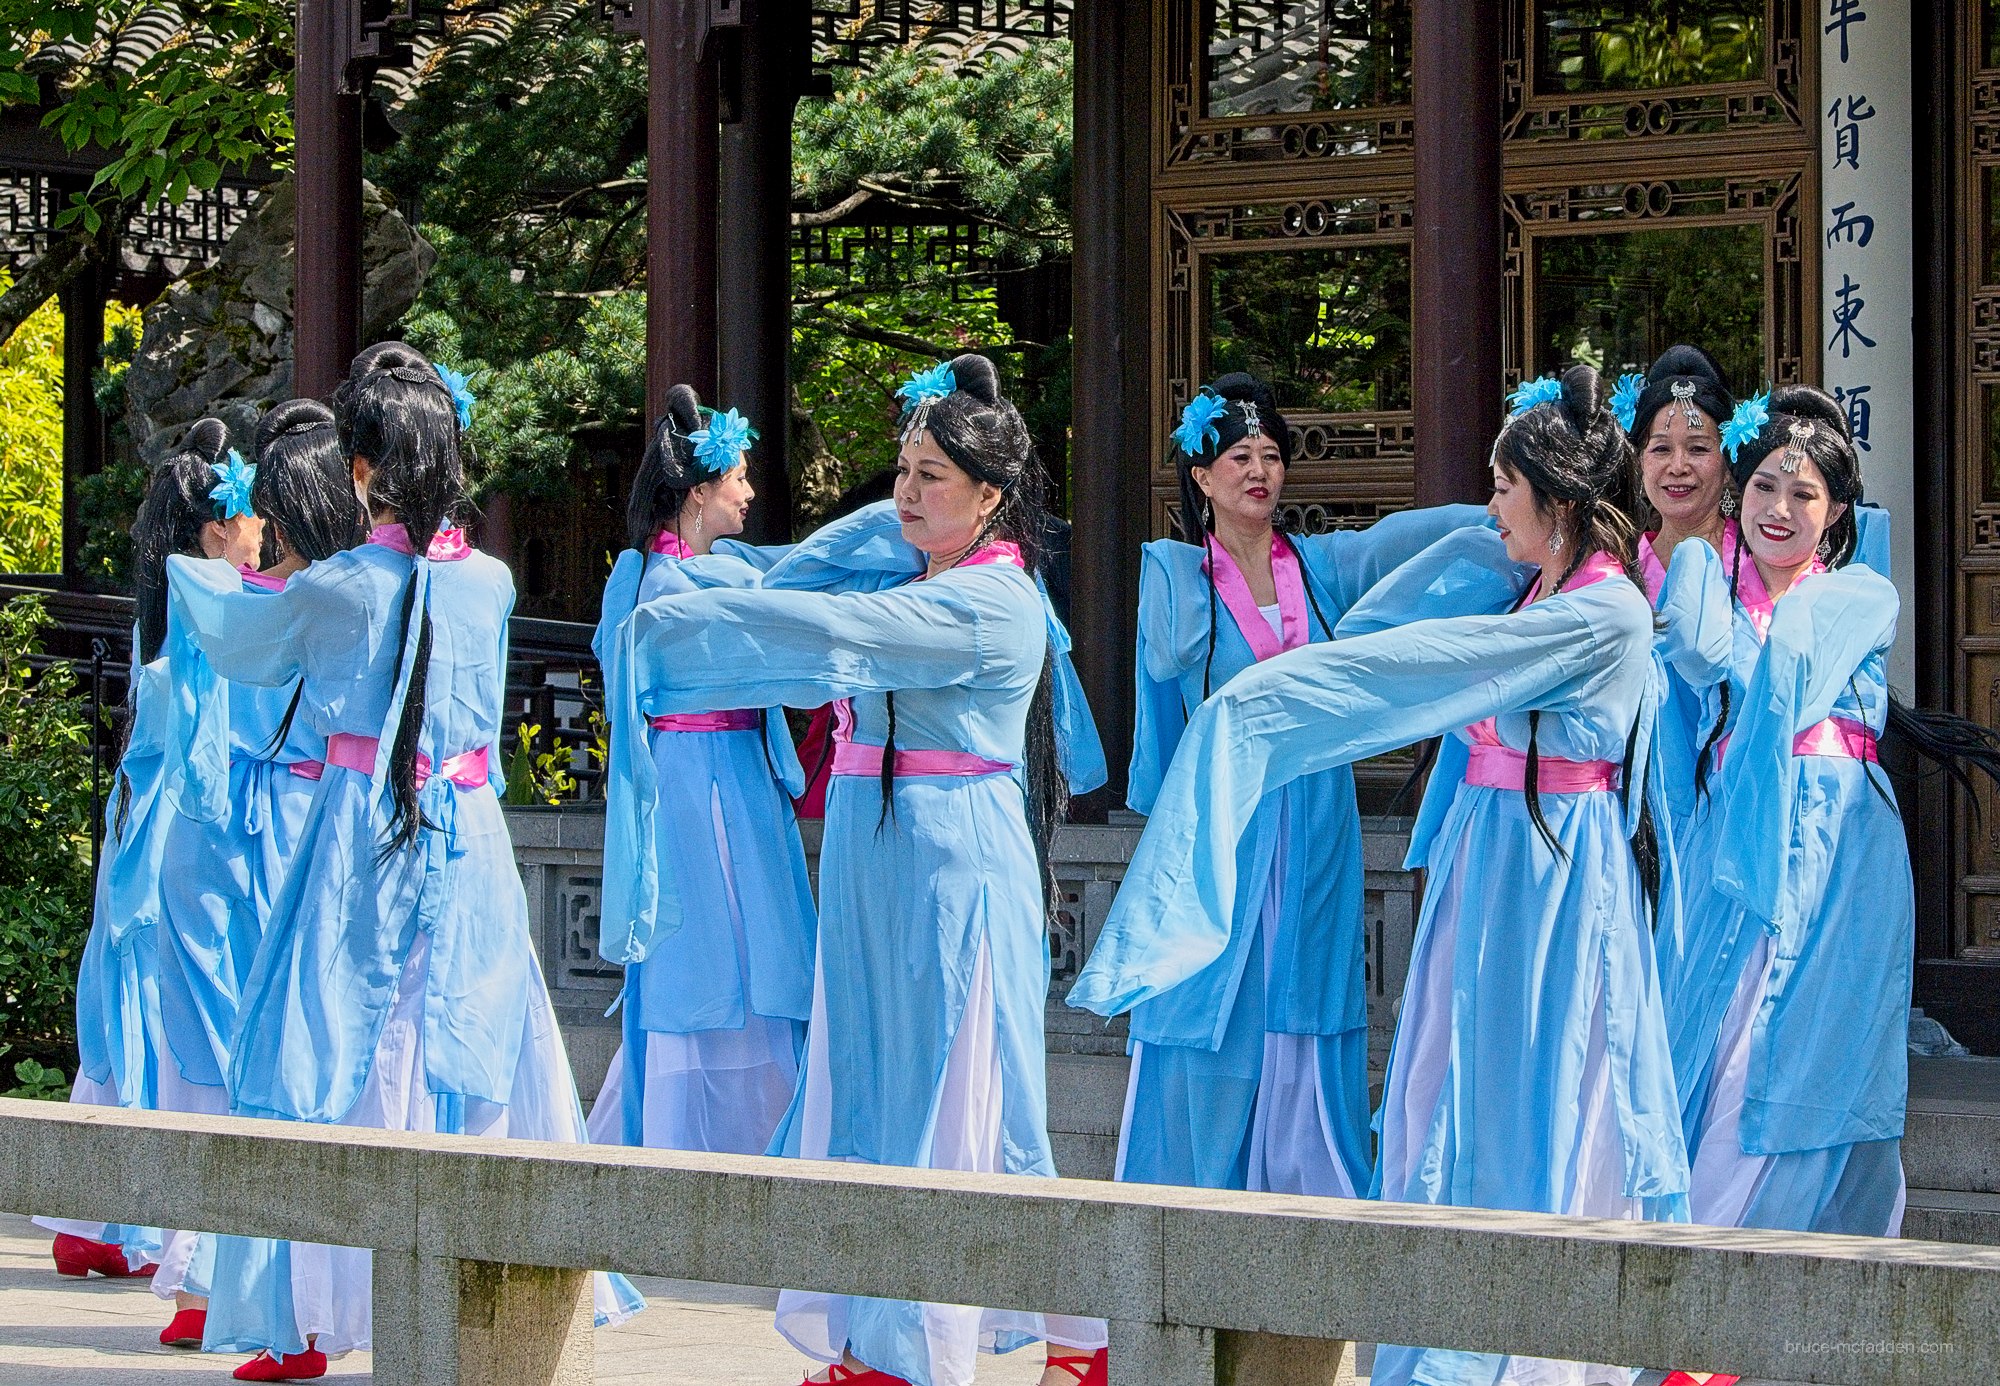 190512-Lan Su Chinese Garden Dance-022